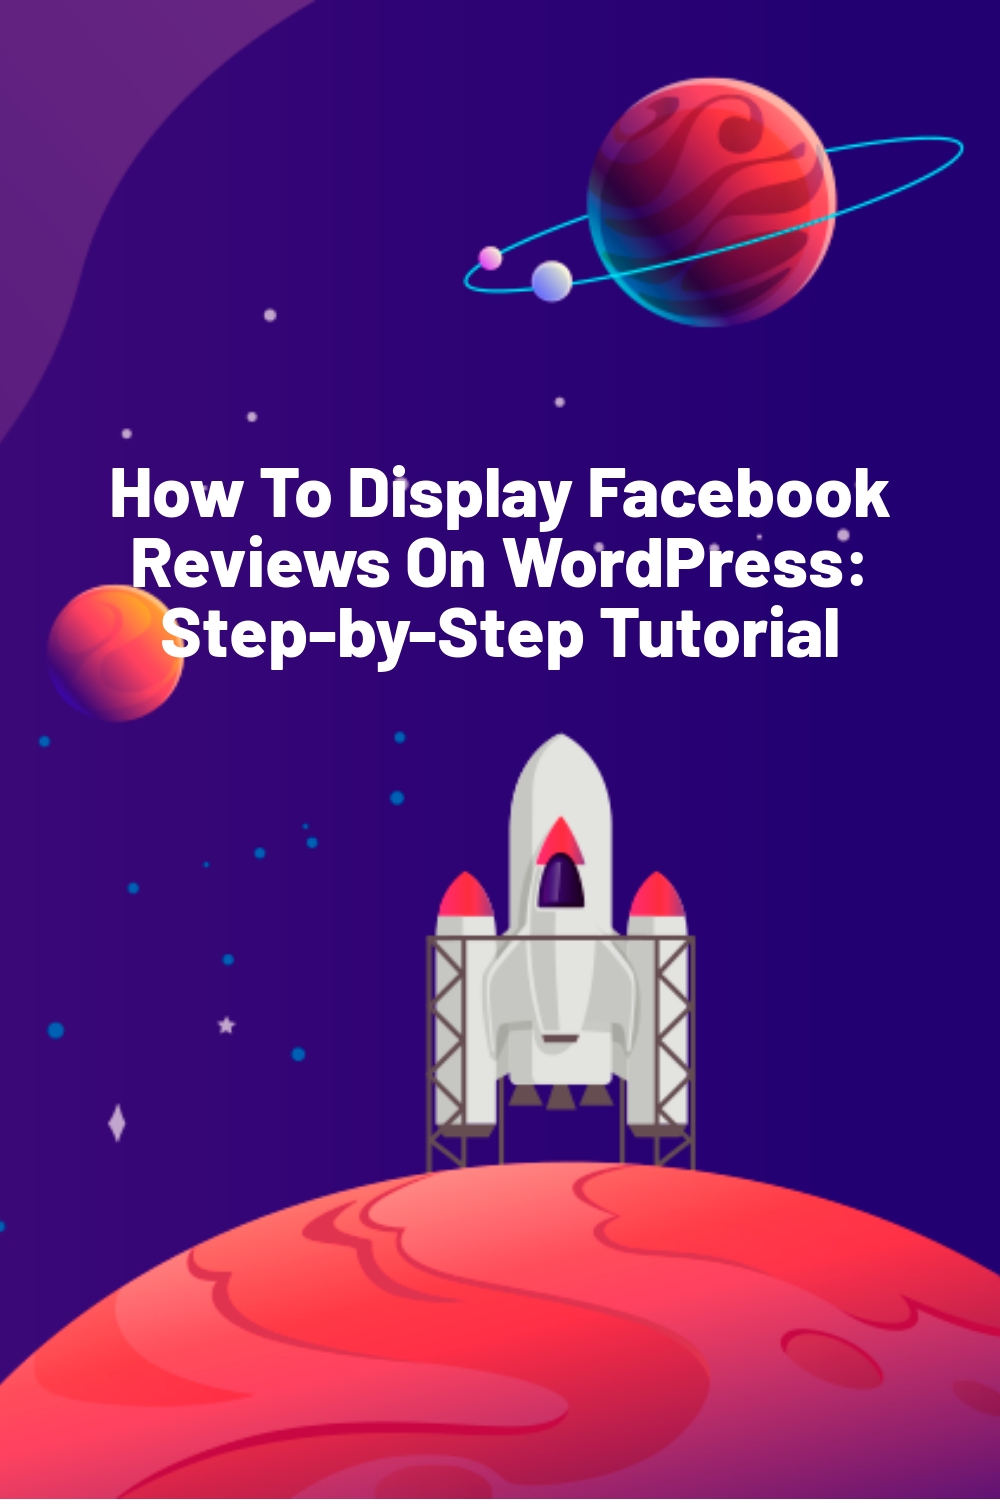 How To Display Facebook Reviews On WordPress: Step-by-Step Tutorial